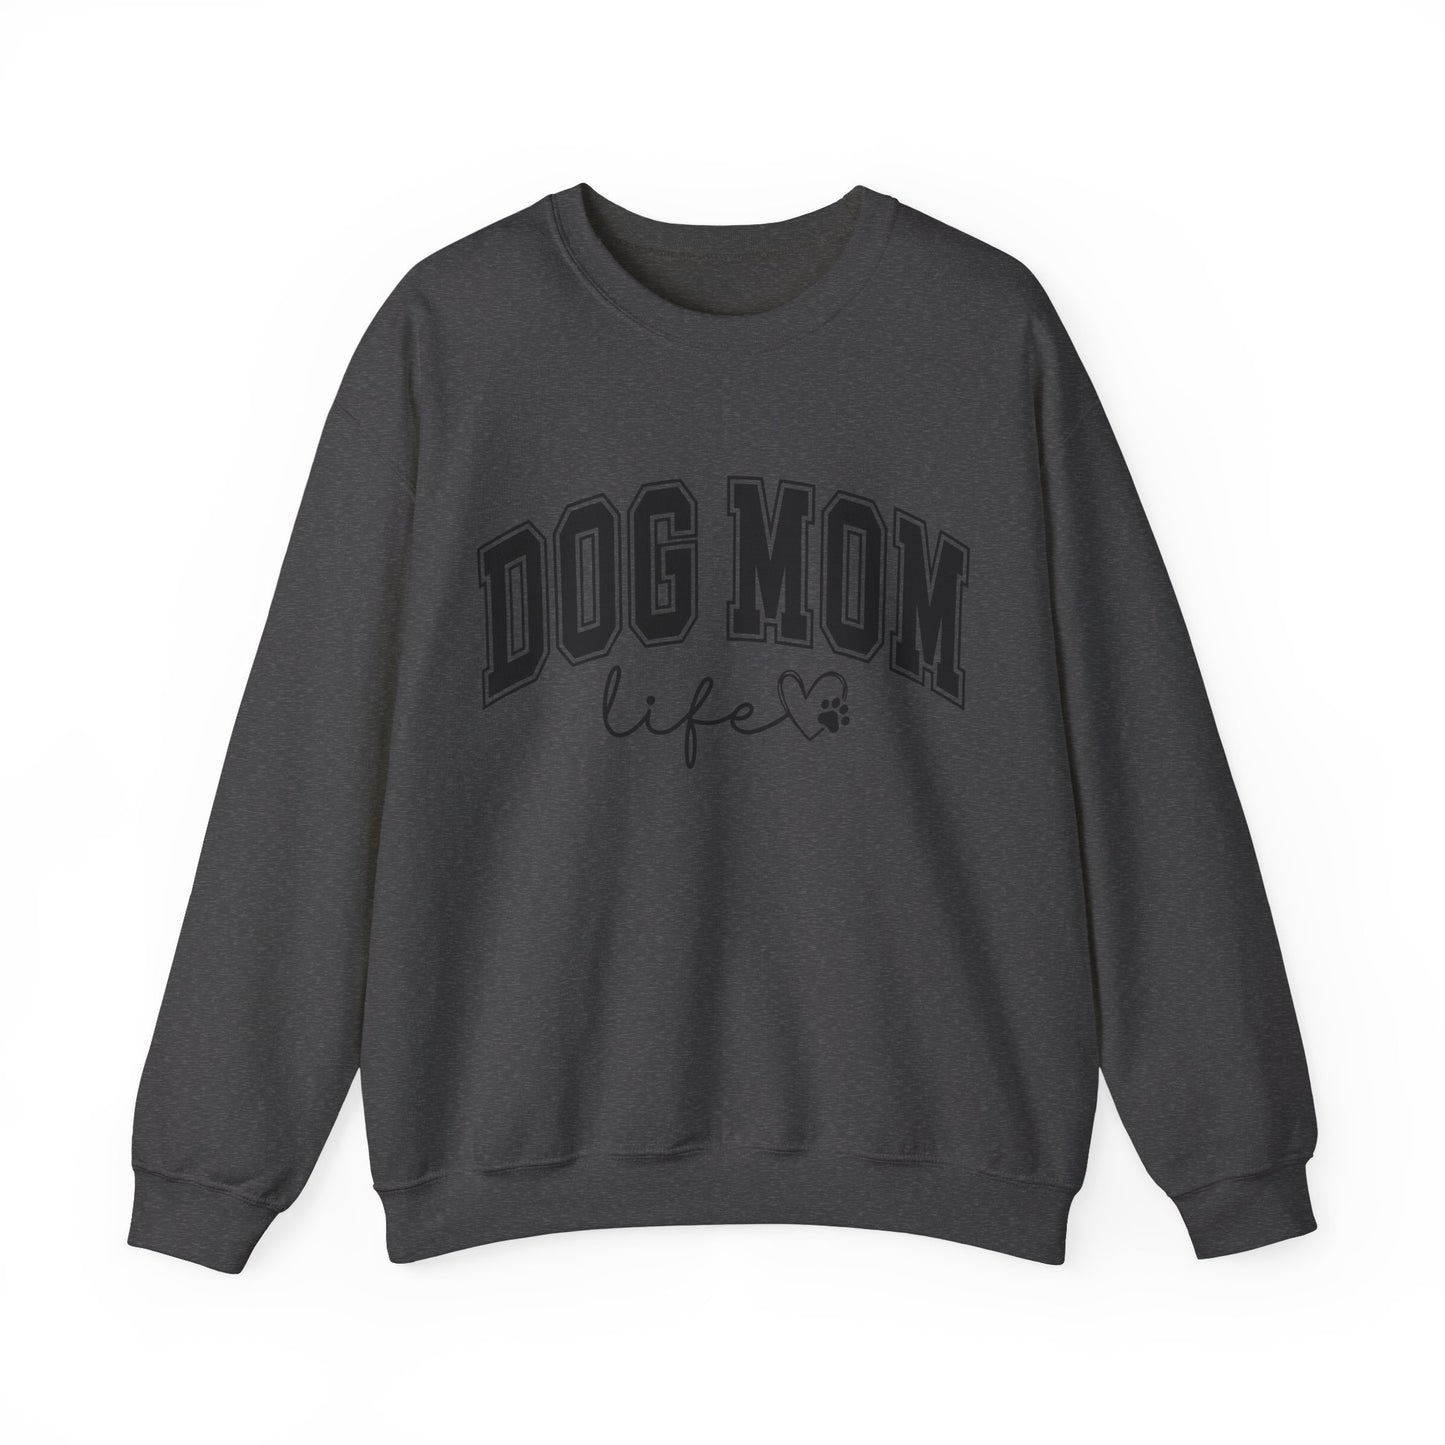 Dog Mom Life Women's Sweatshirt